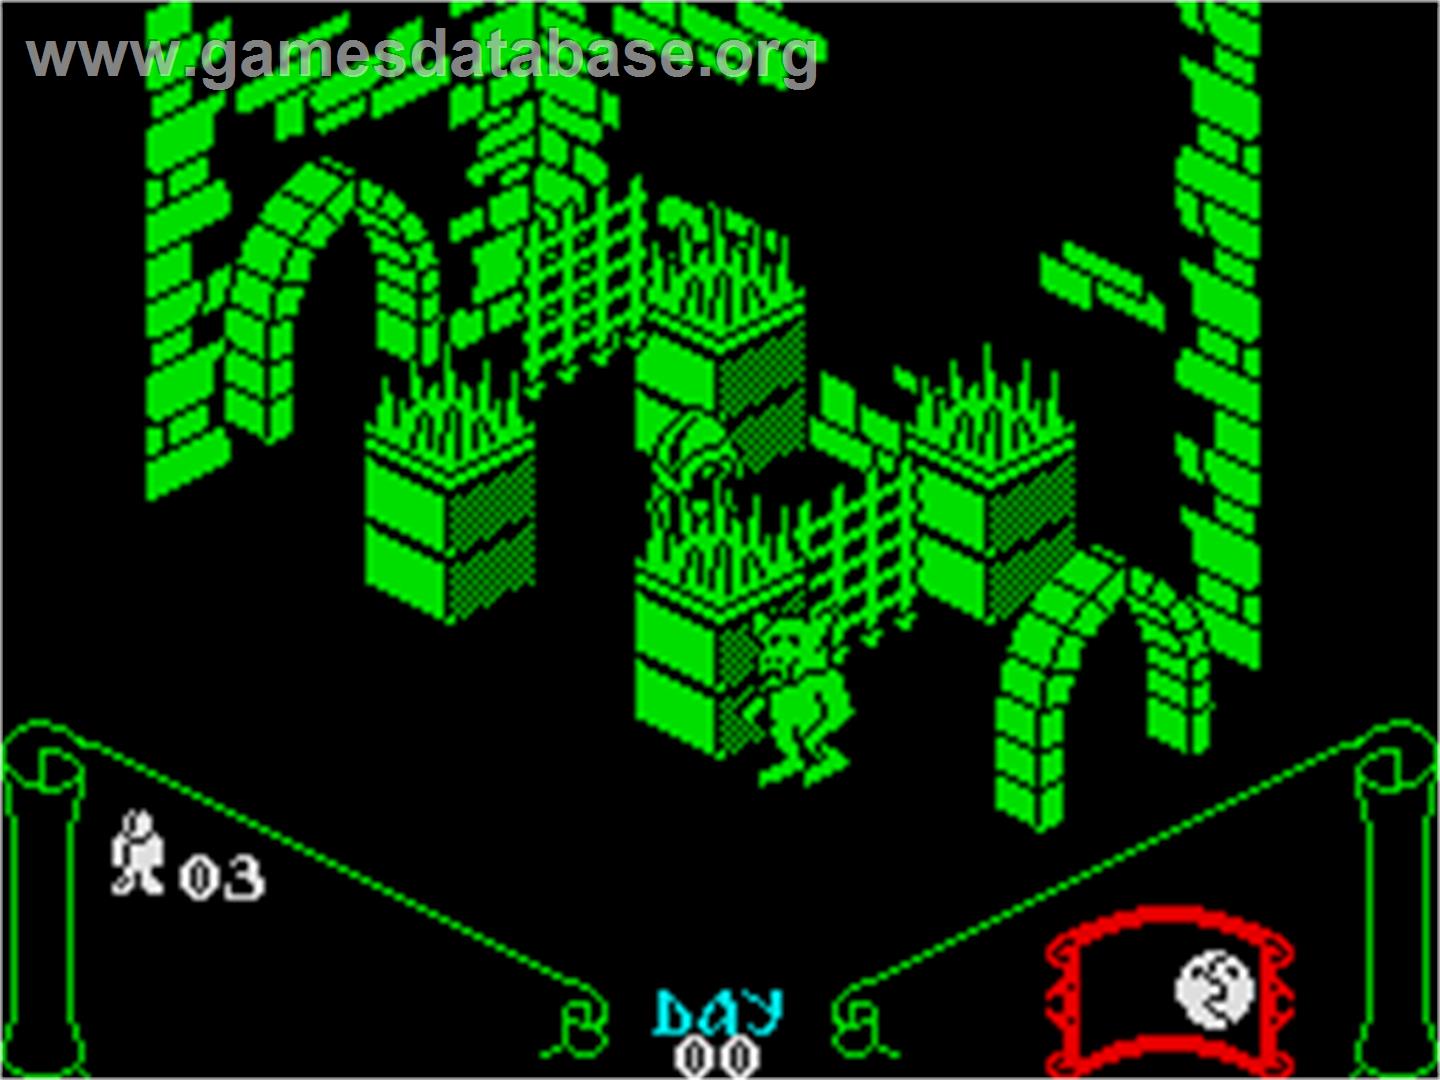 Knight Lore - Sinclair ZX Spectrum - Artwork - In Game